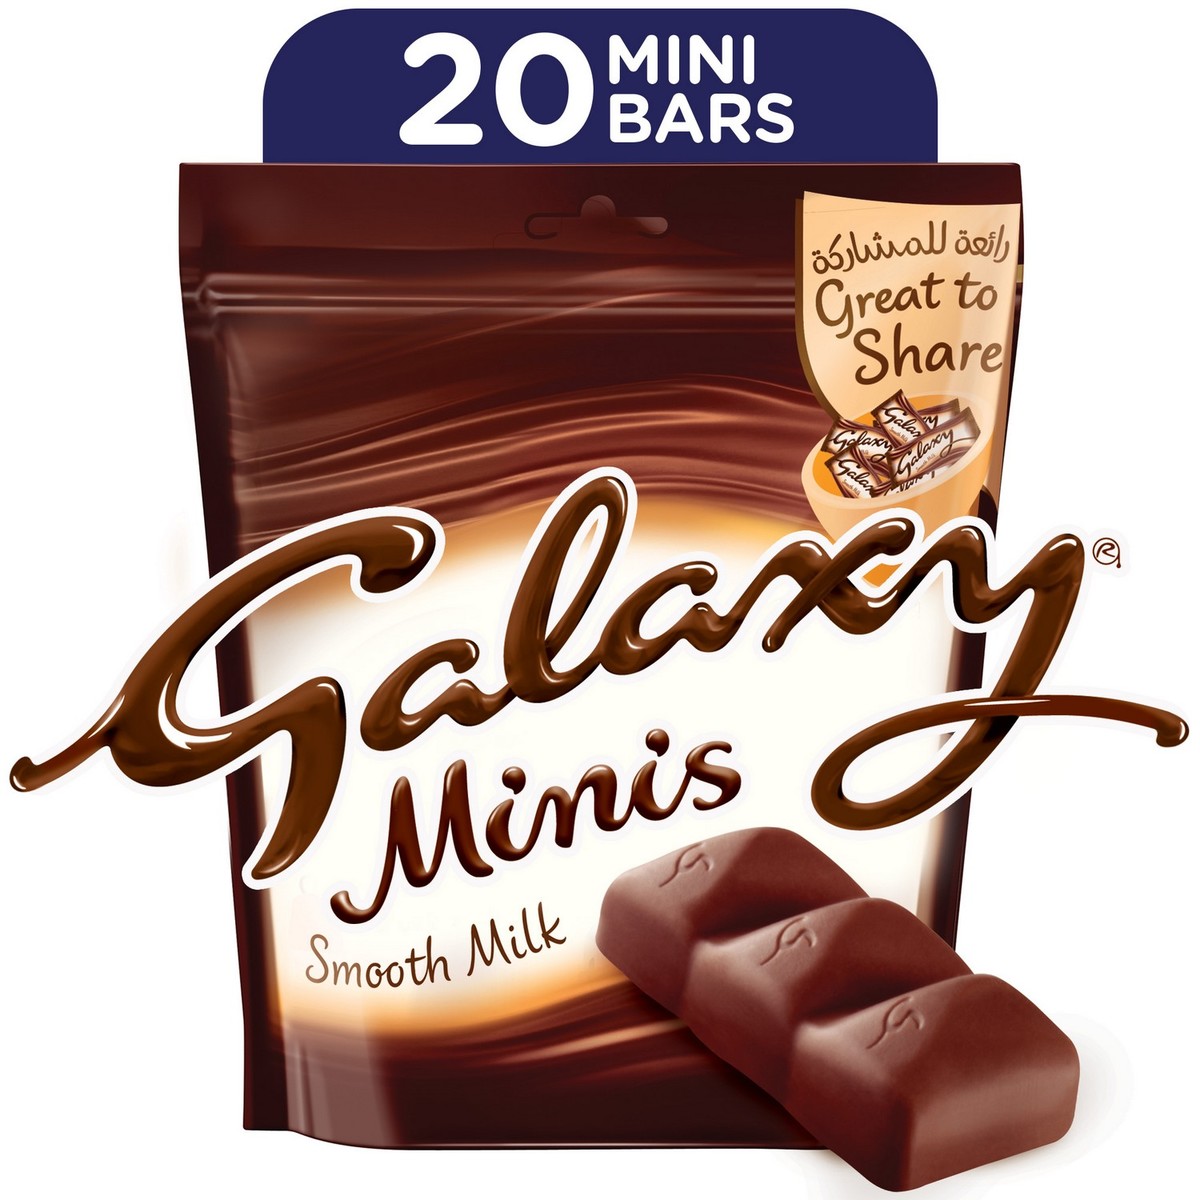 Galaxy Minis Smooth Milk Chocolate Mini Bars 20 pcs 250 g